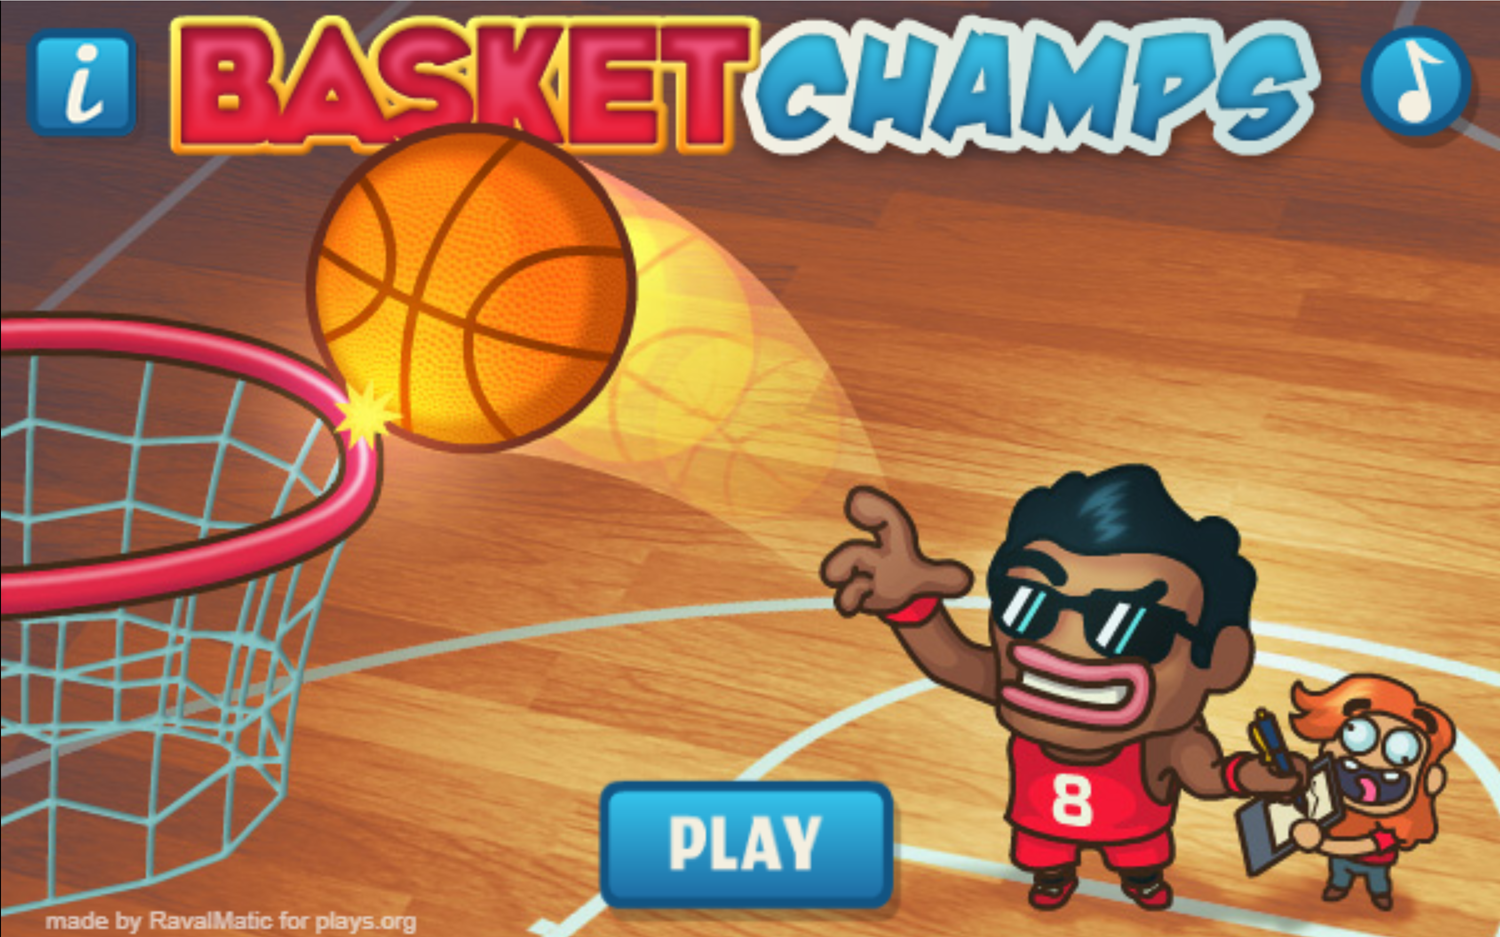 Basket Champs Welcome Screen Screenshot.